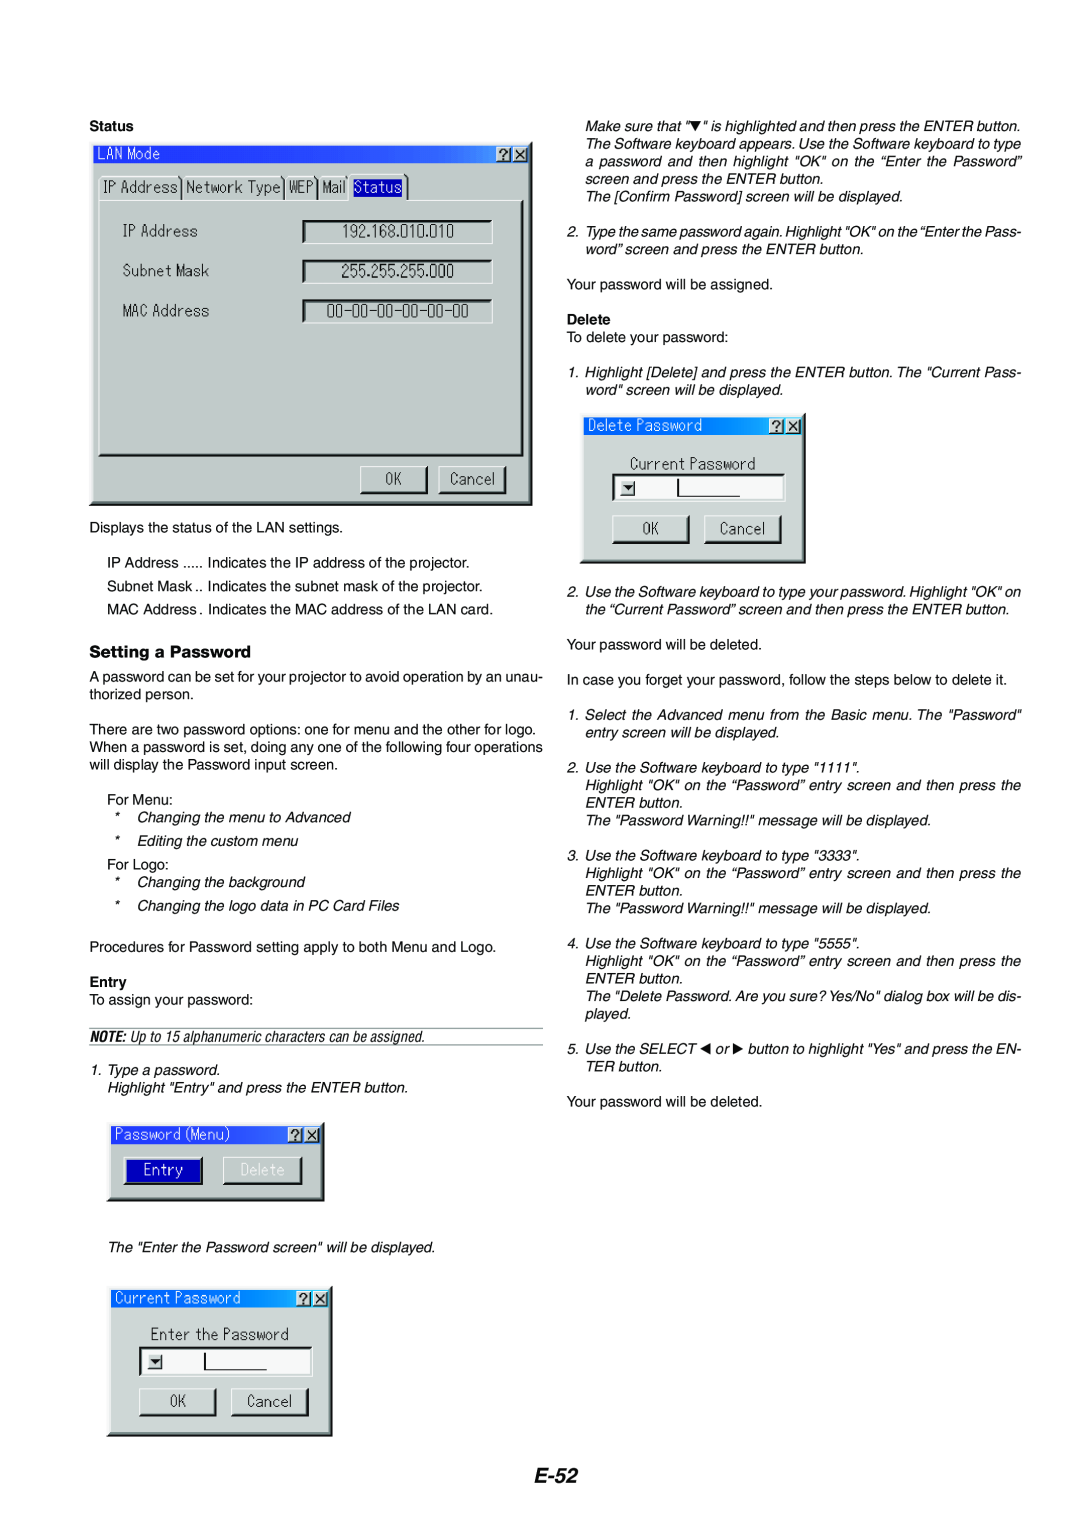 Kensington MT1075, MT1065 user manual E-52, Setting a Password, Status, Entry, Delete 